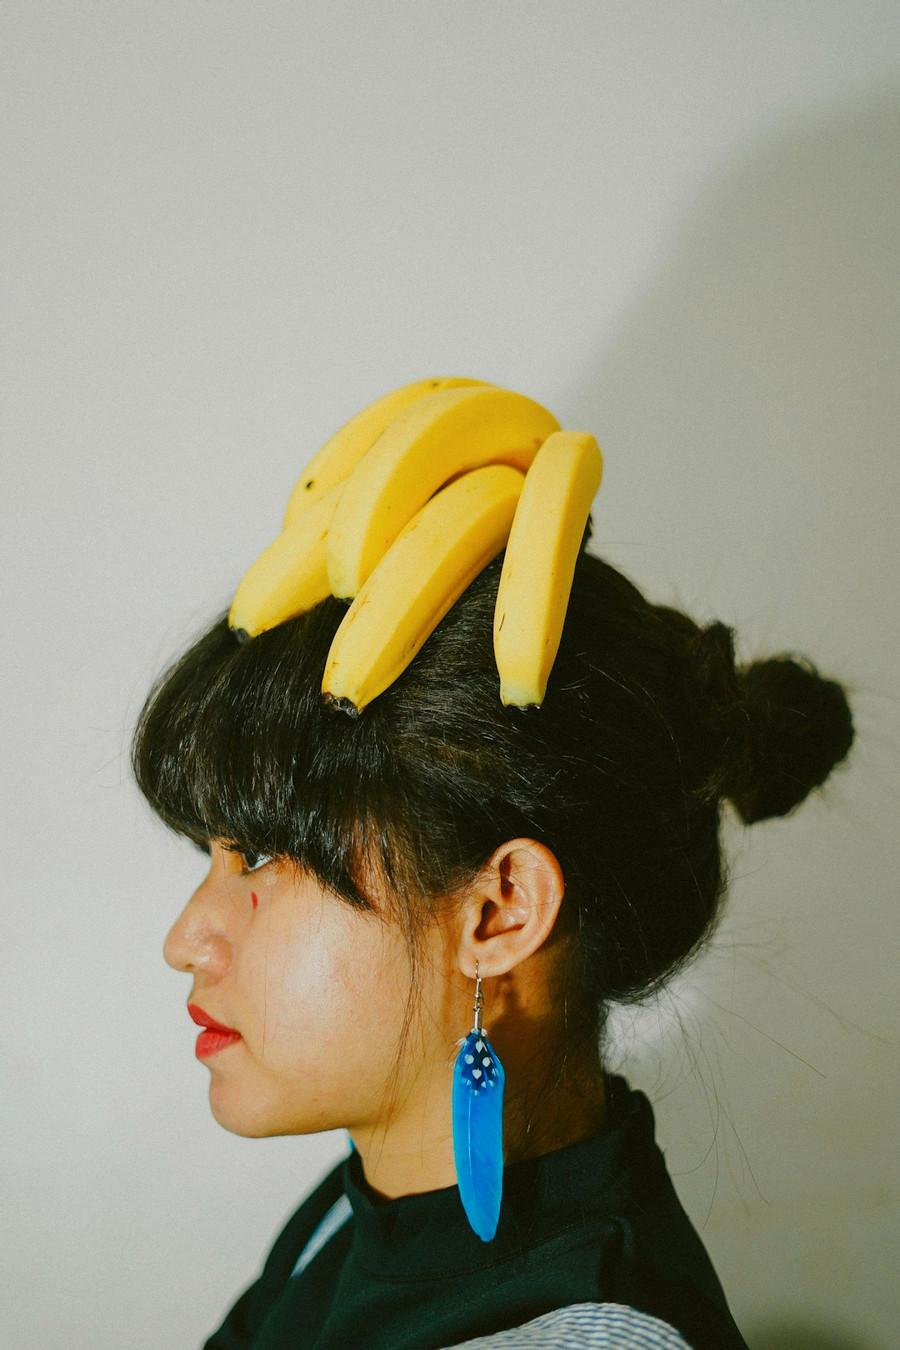 Don’t make like a banana & split